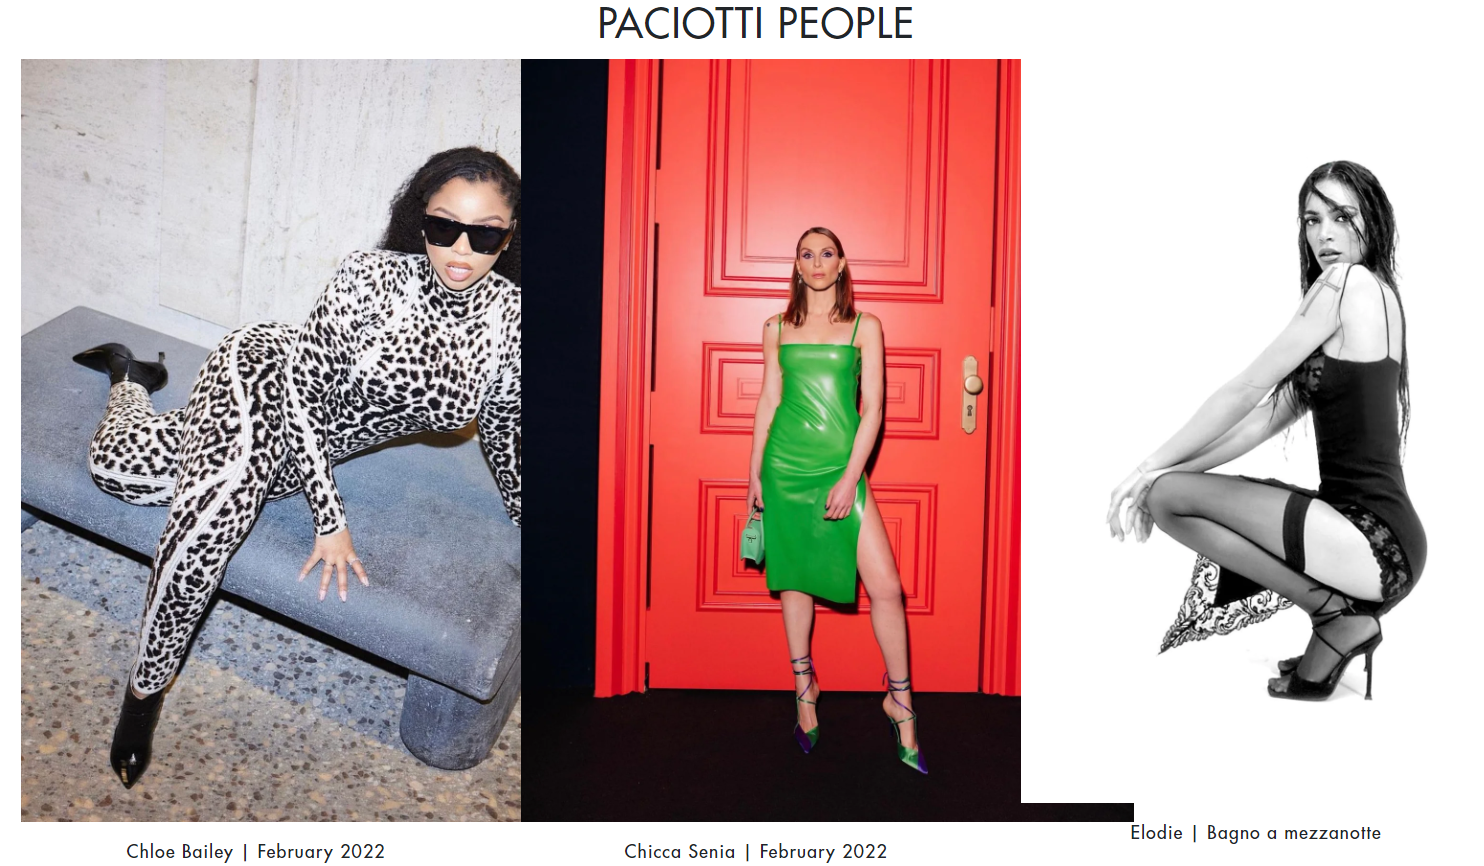 Paciotti People